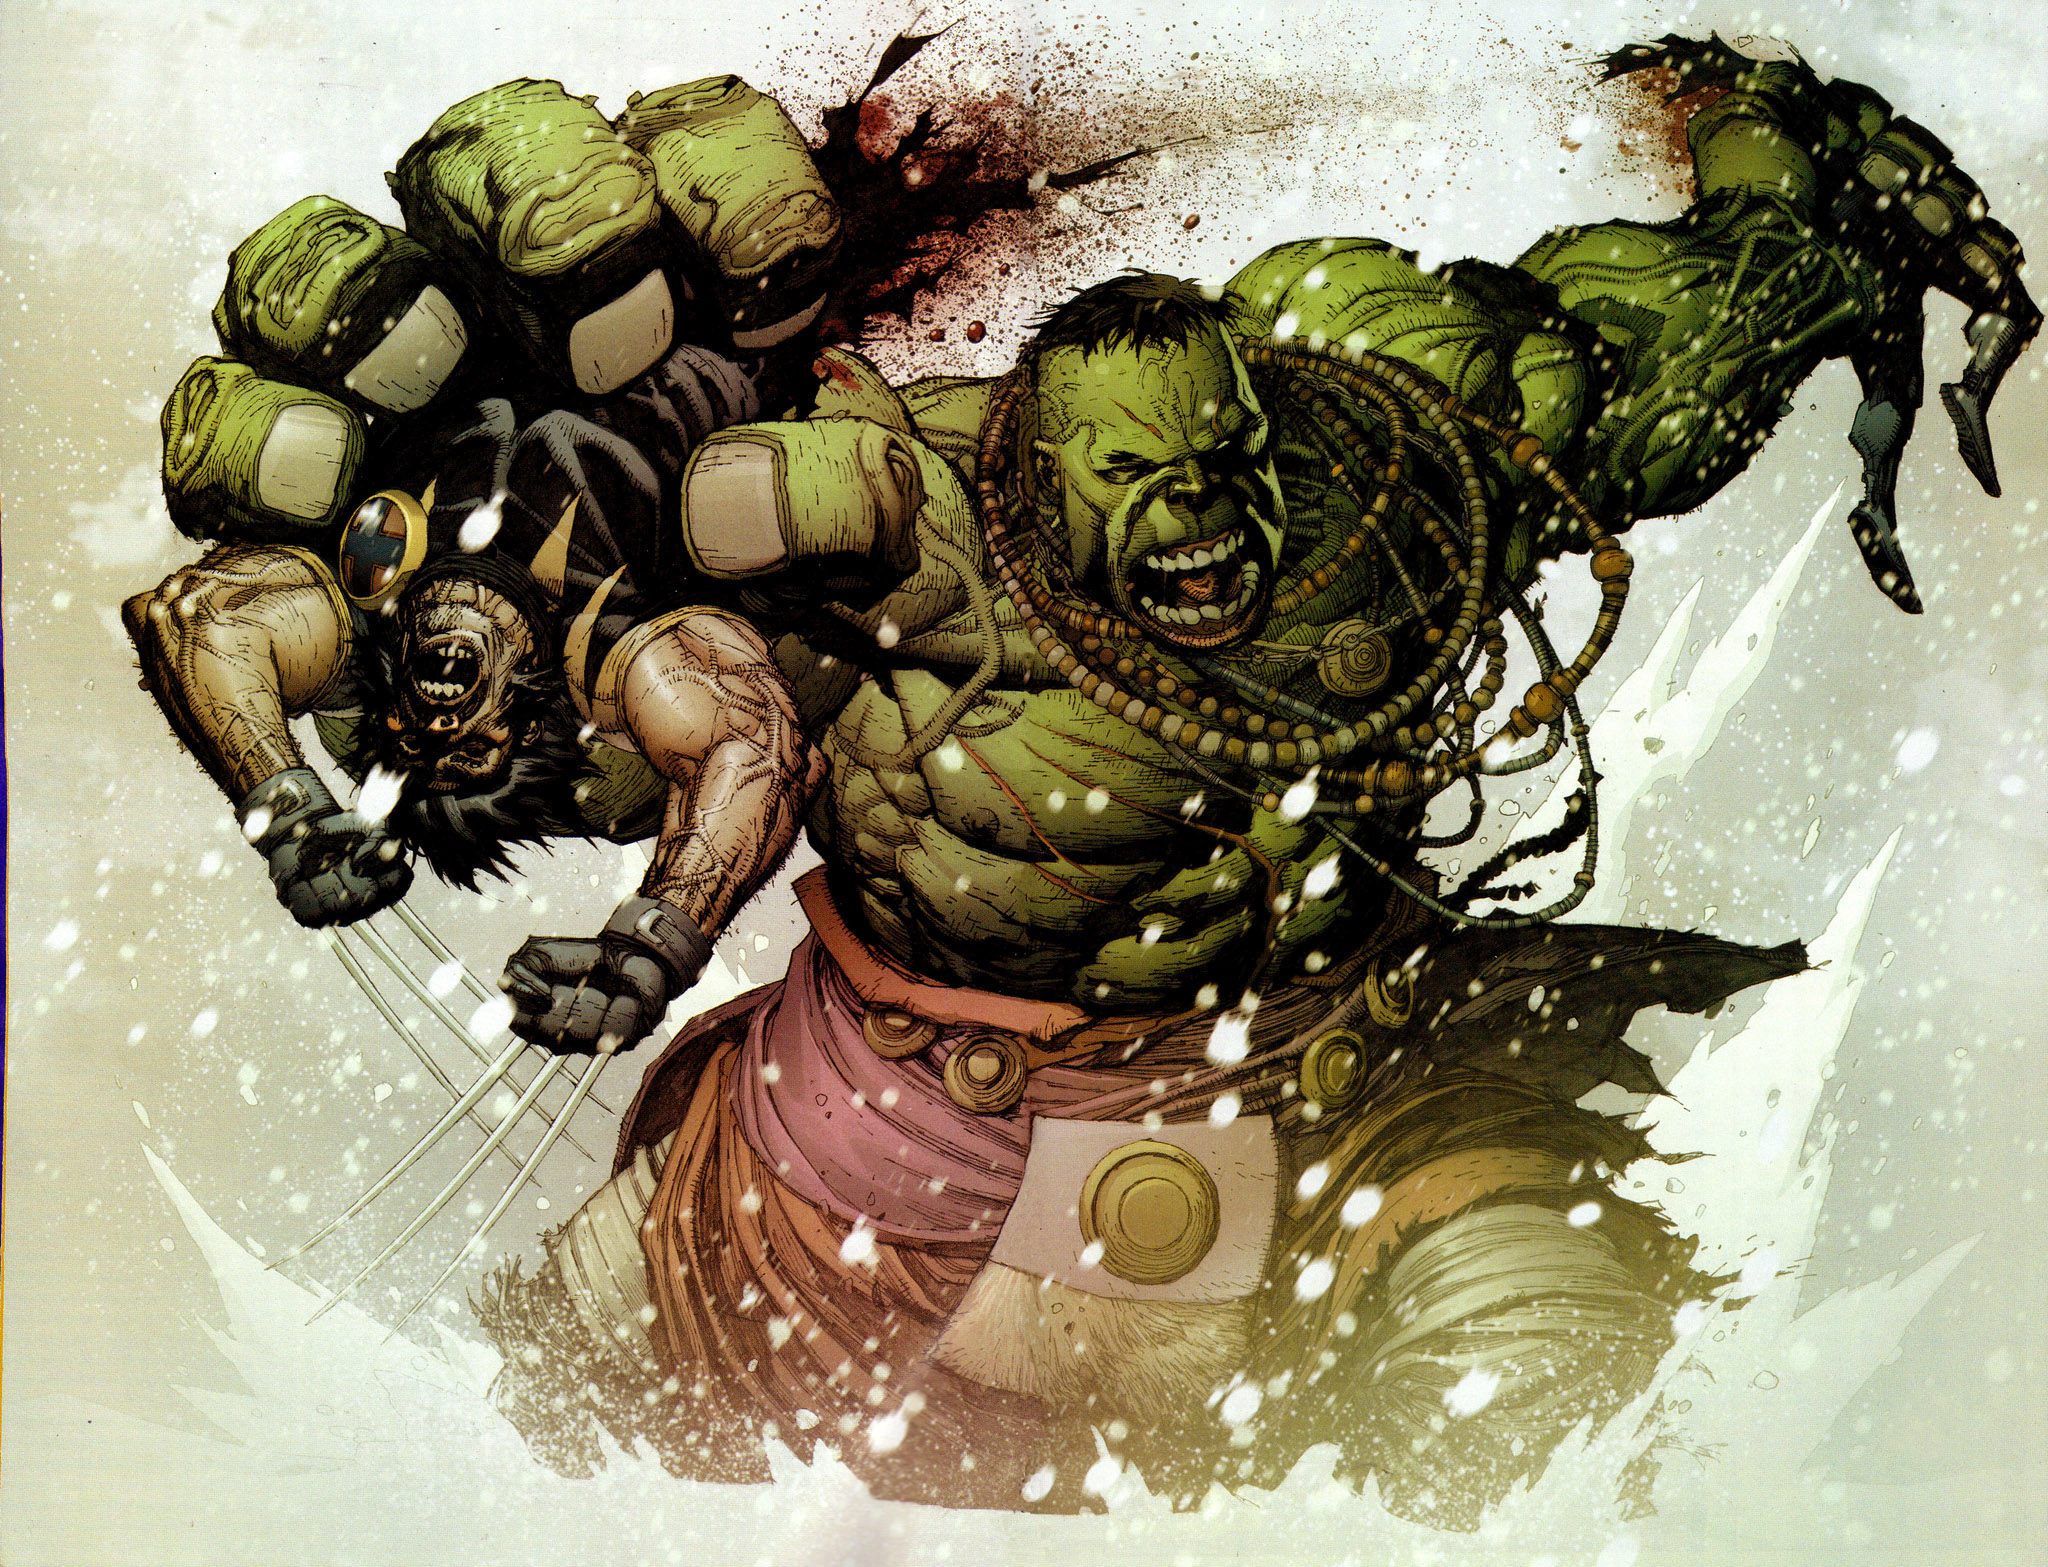 the-hulk-rips-wolverine-in-half.jpg